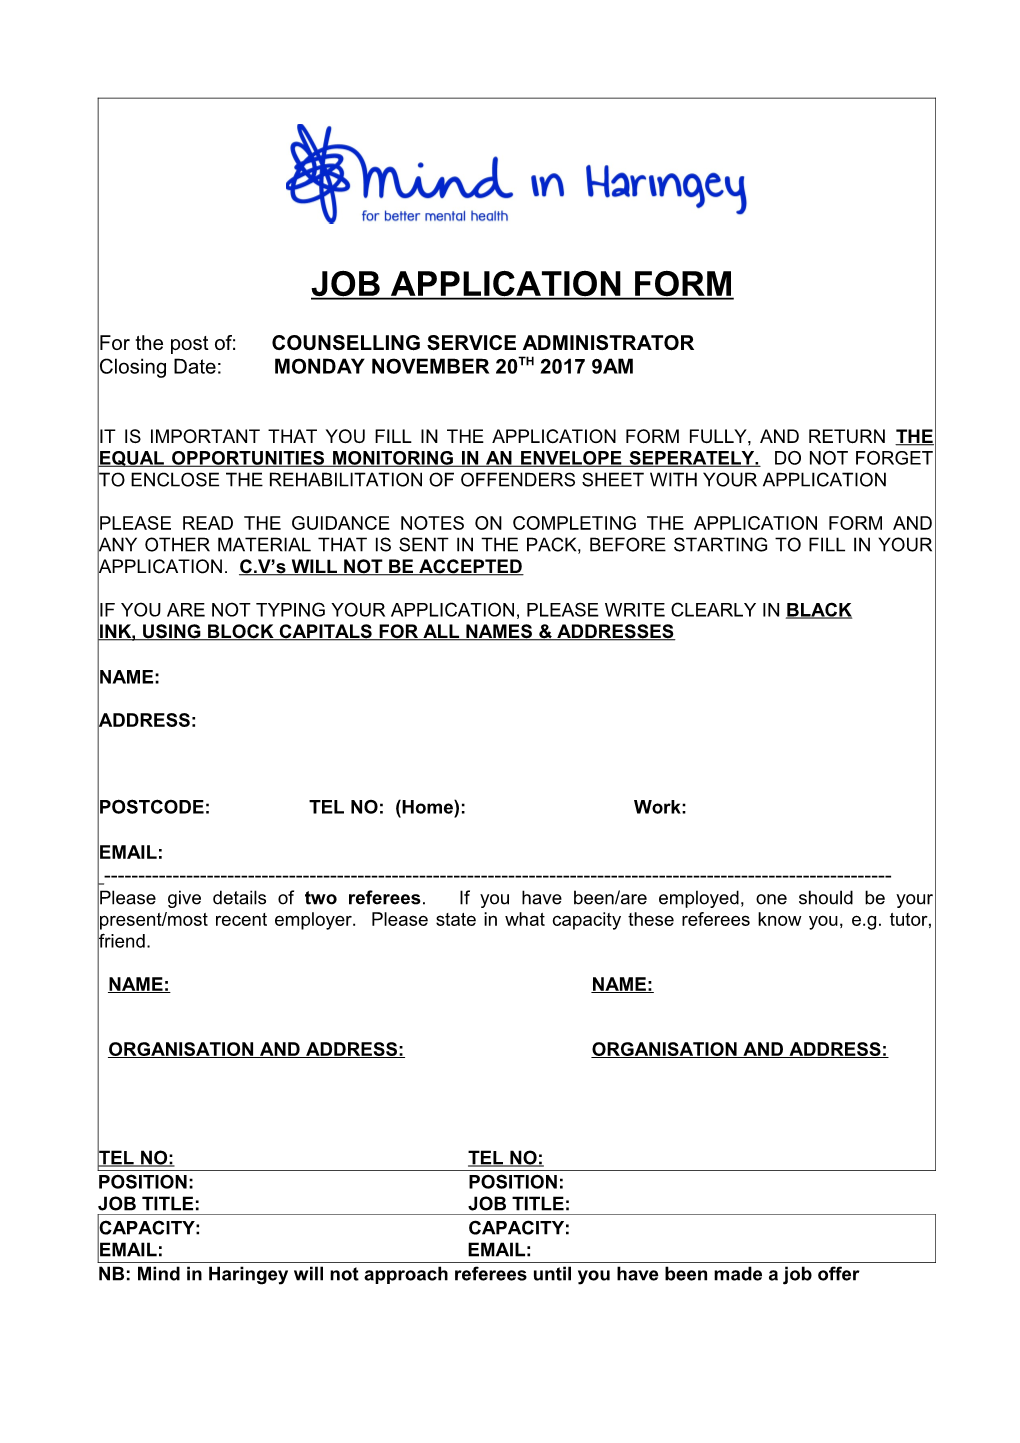 Mind in Haringey Job Application Form